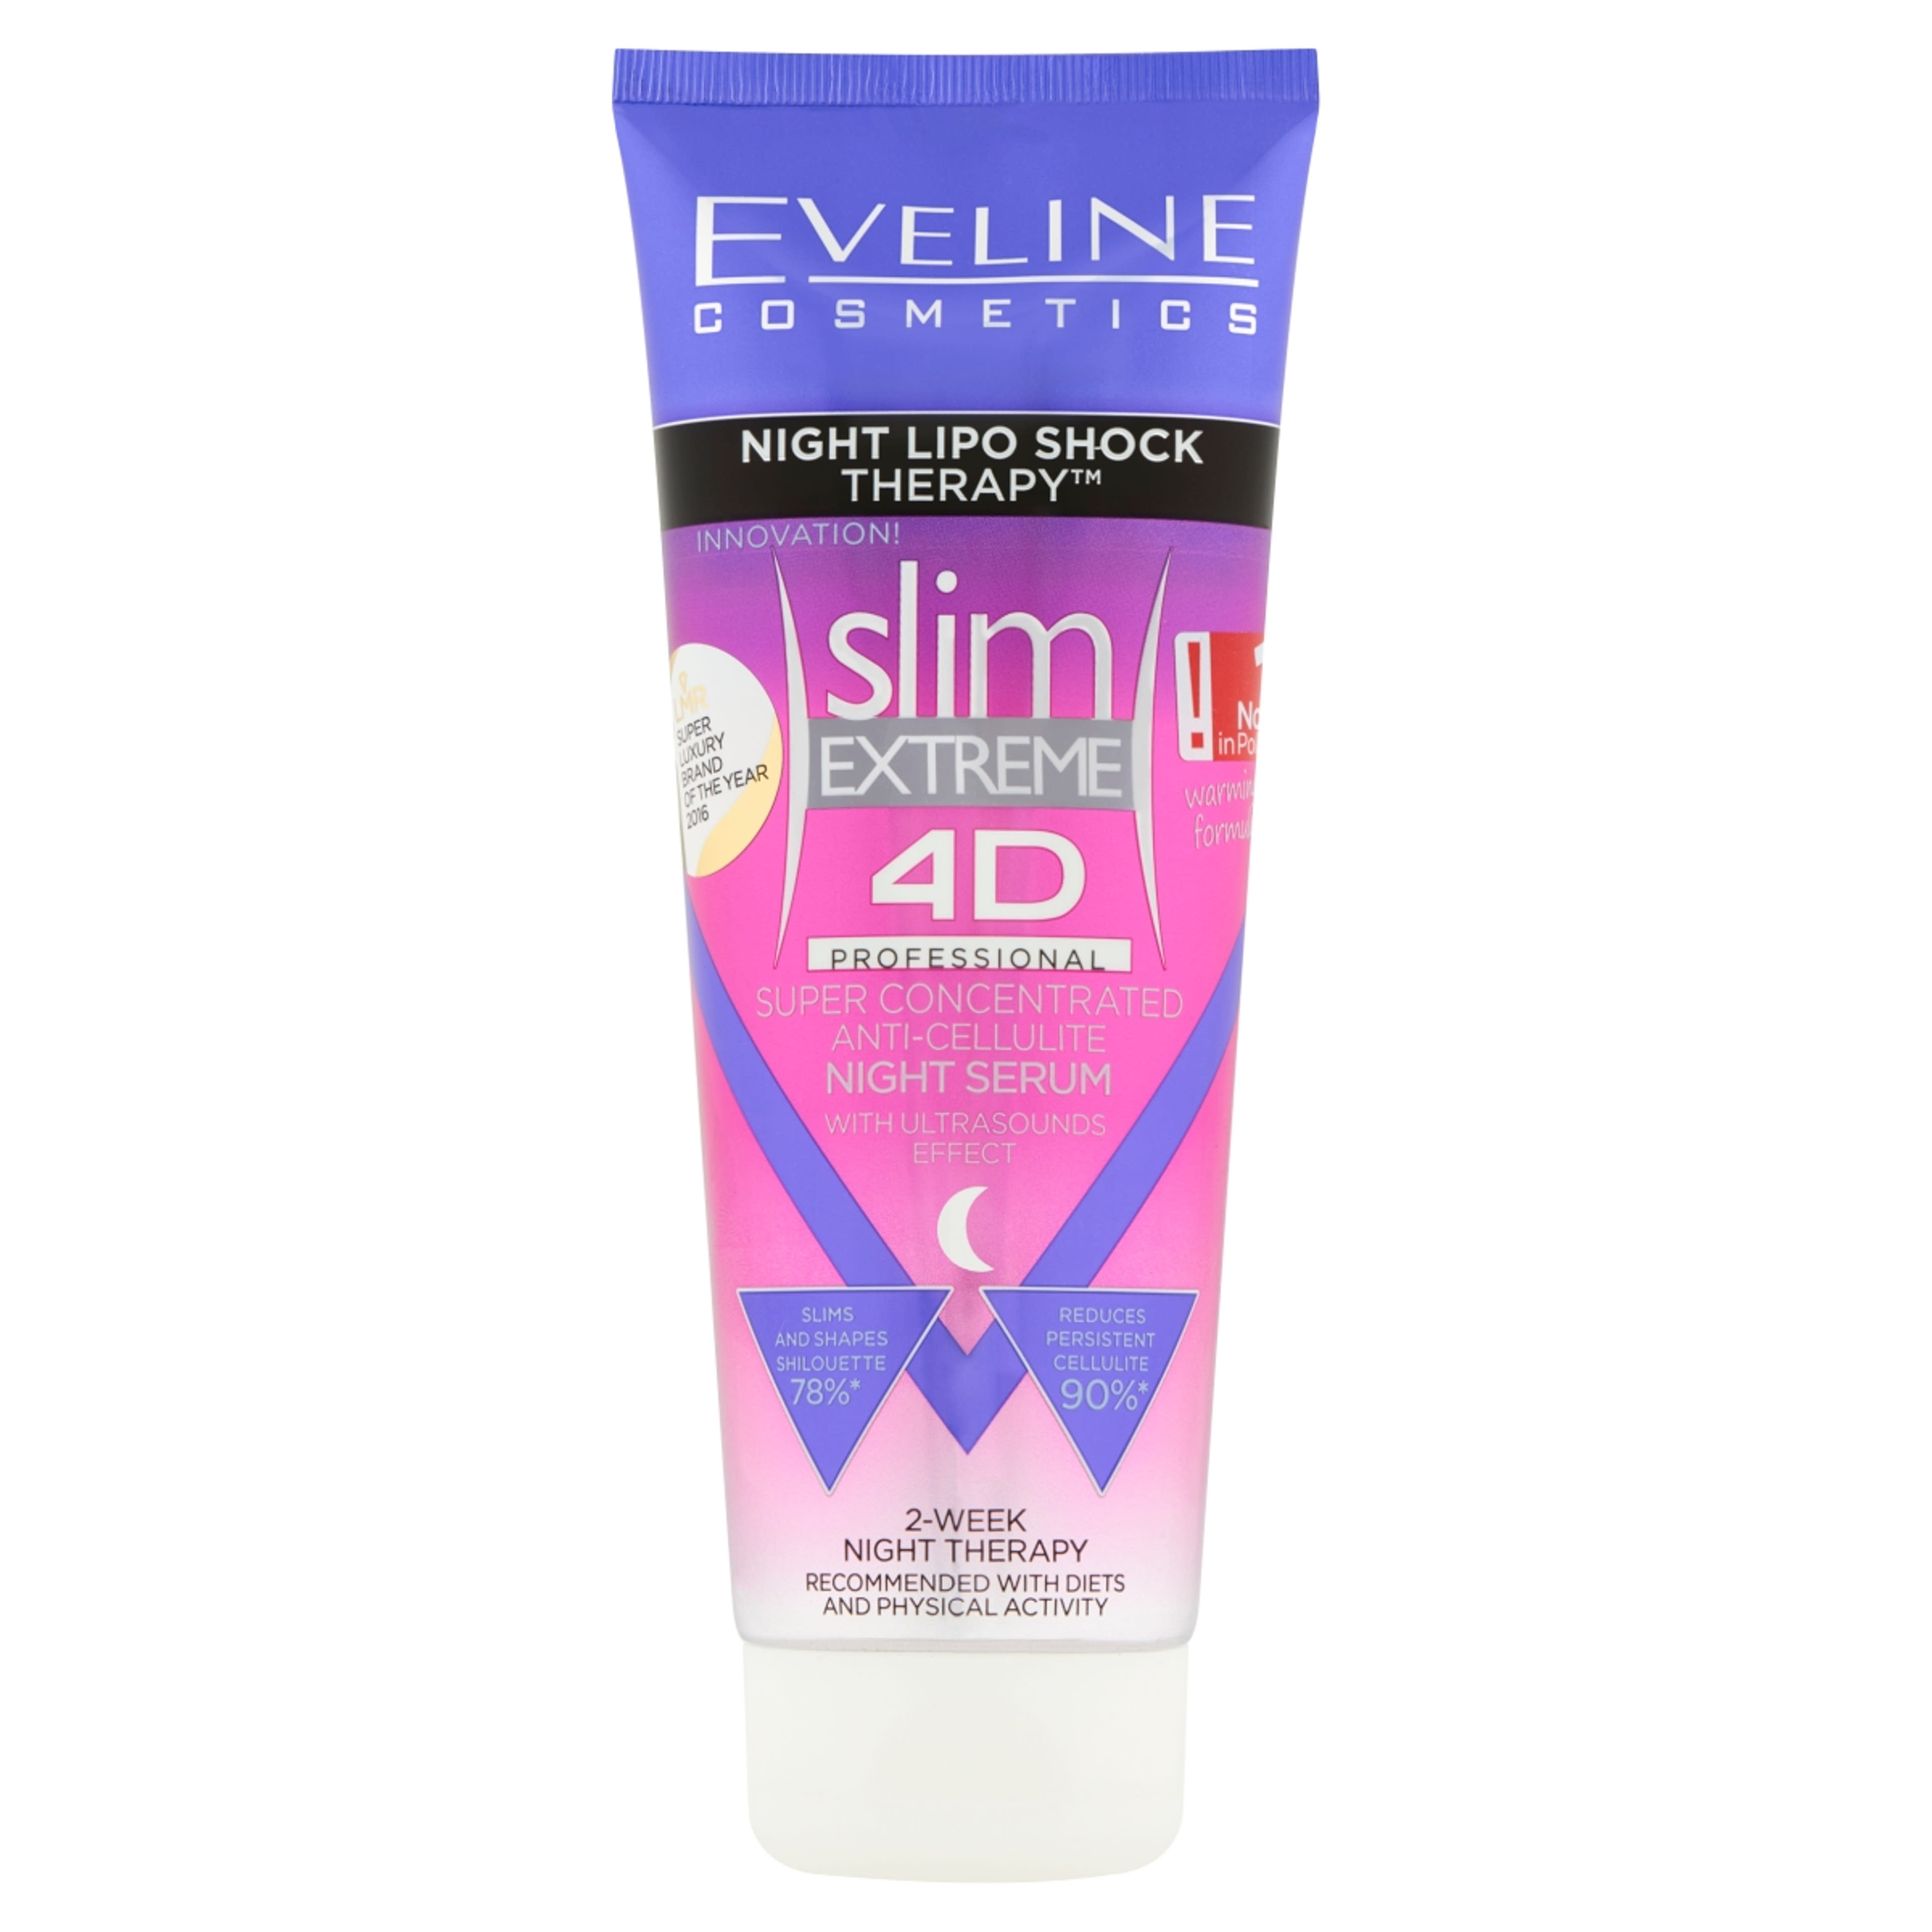 Eveline 4D Night Lipo Shock Therapy éjszakai szérum - 250 ml